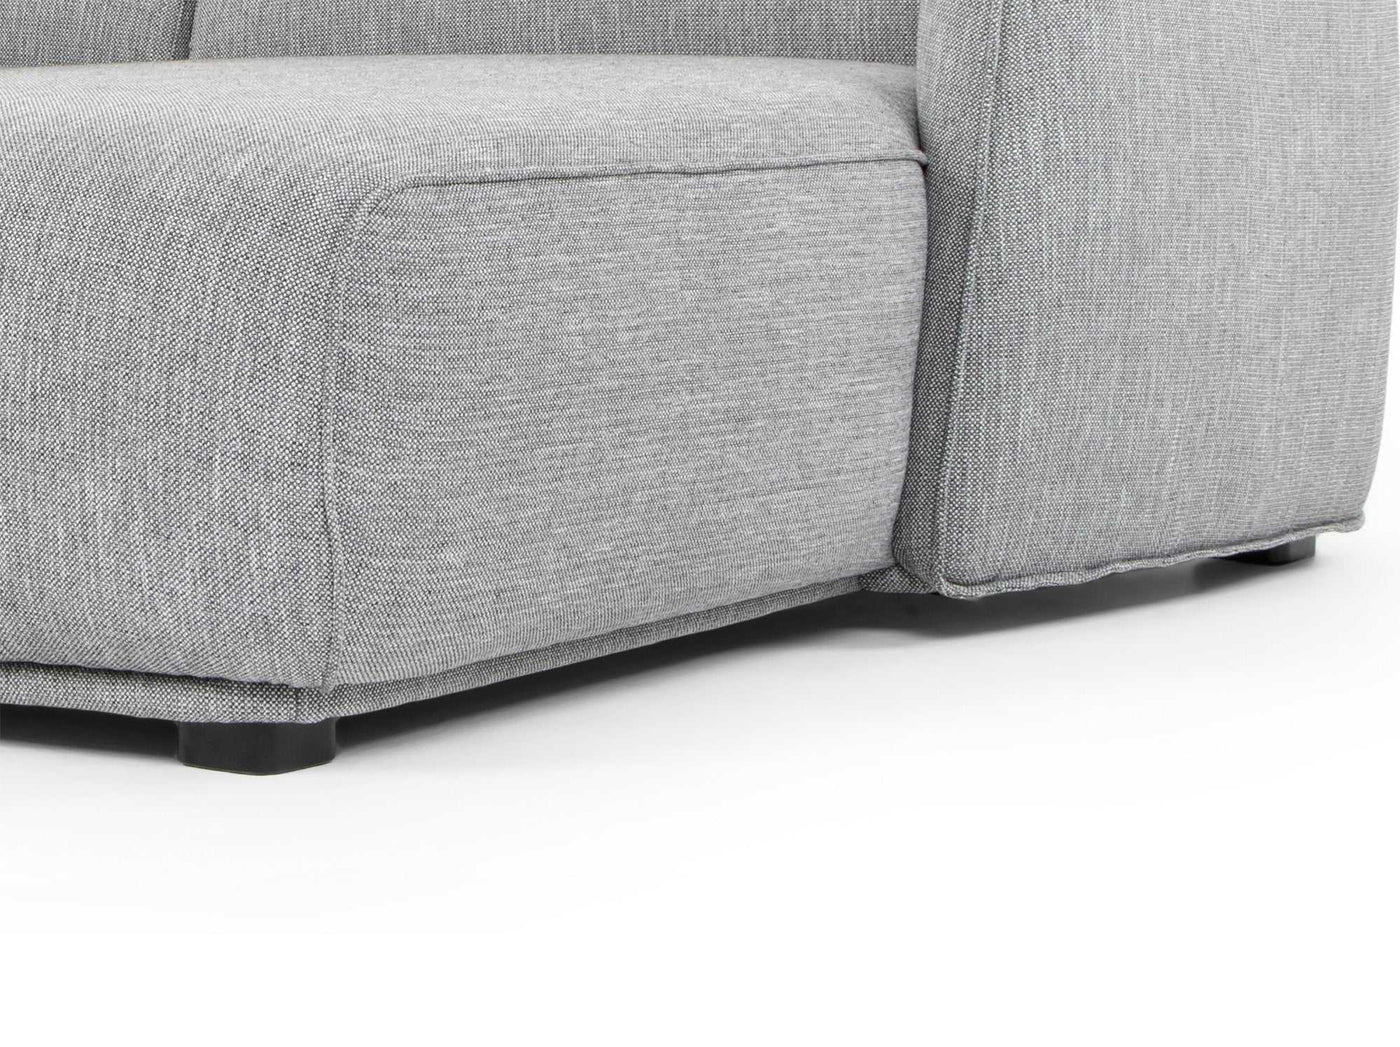 3 Seater Right Chaise Sofa - Graphite Grey